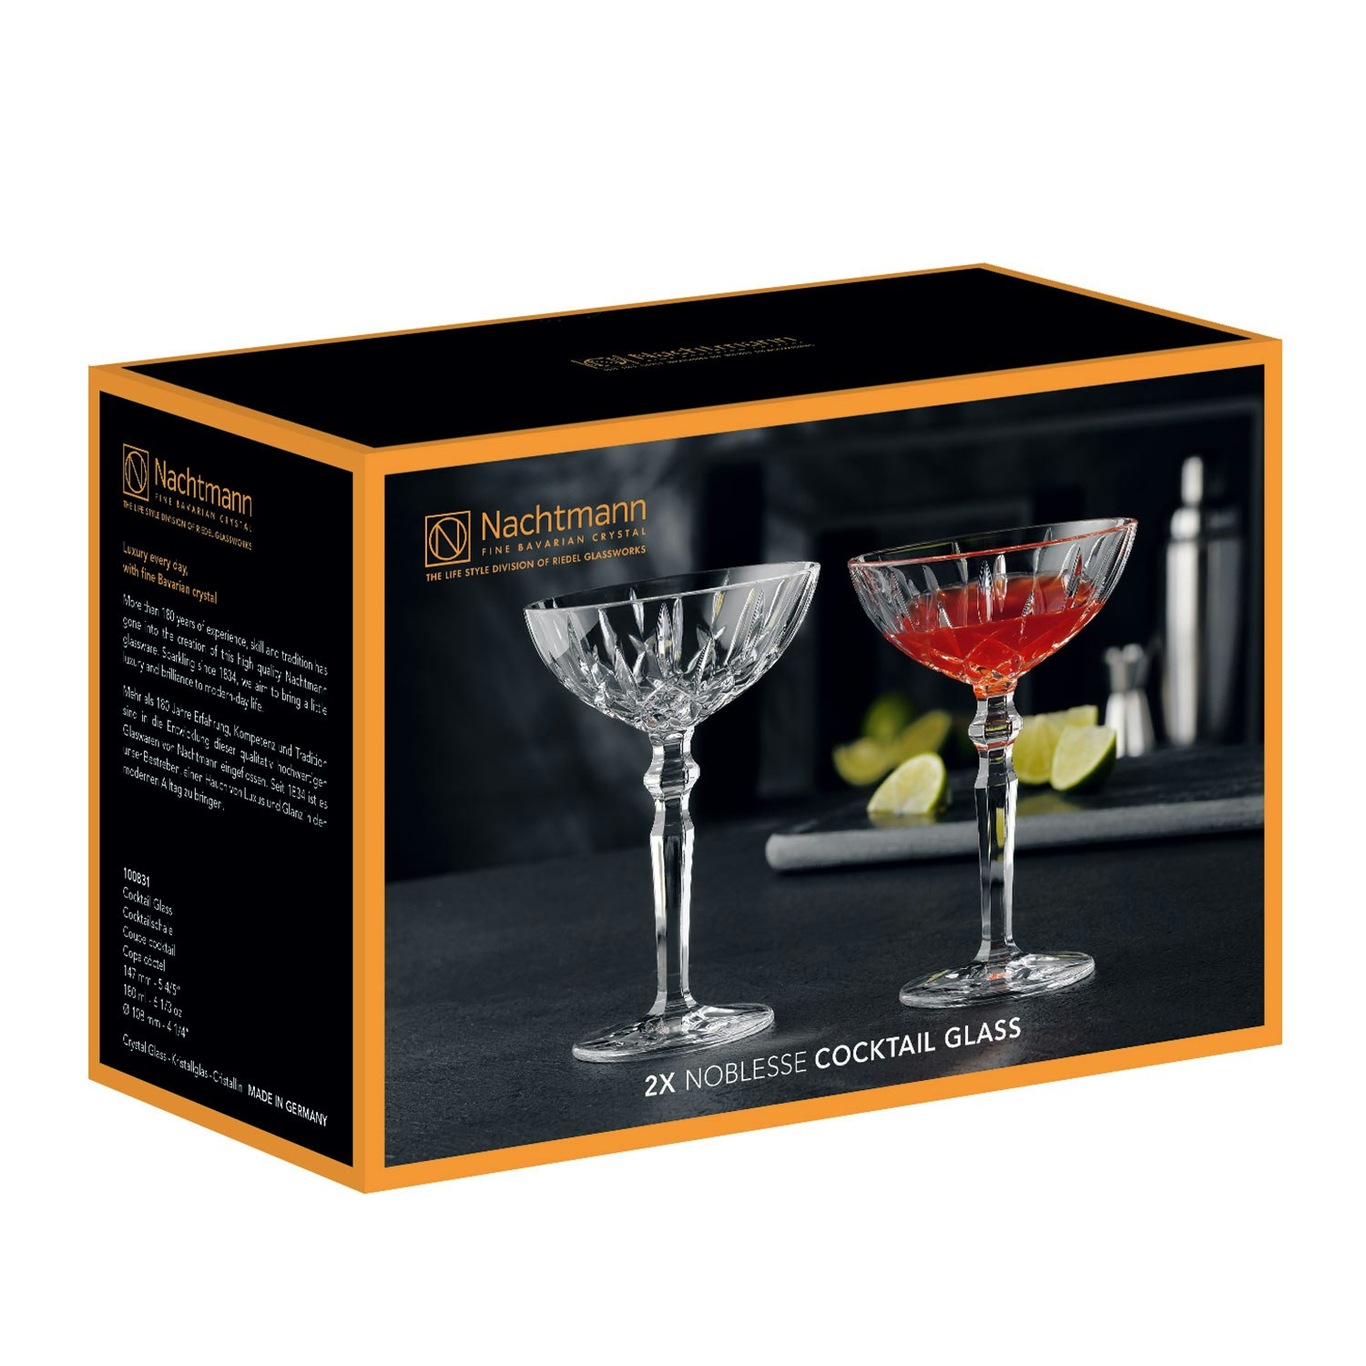 https://royaldesign.com/image/2/nachtmann-noblesse-cocktail-glass-set-of-2-1?w=800&quality=80